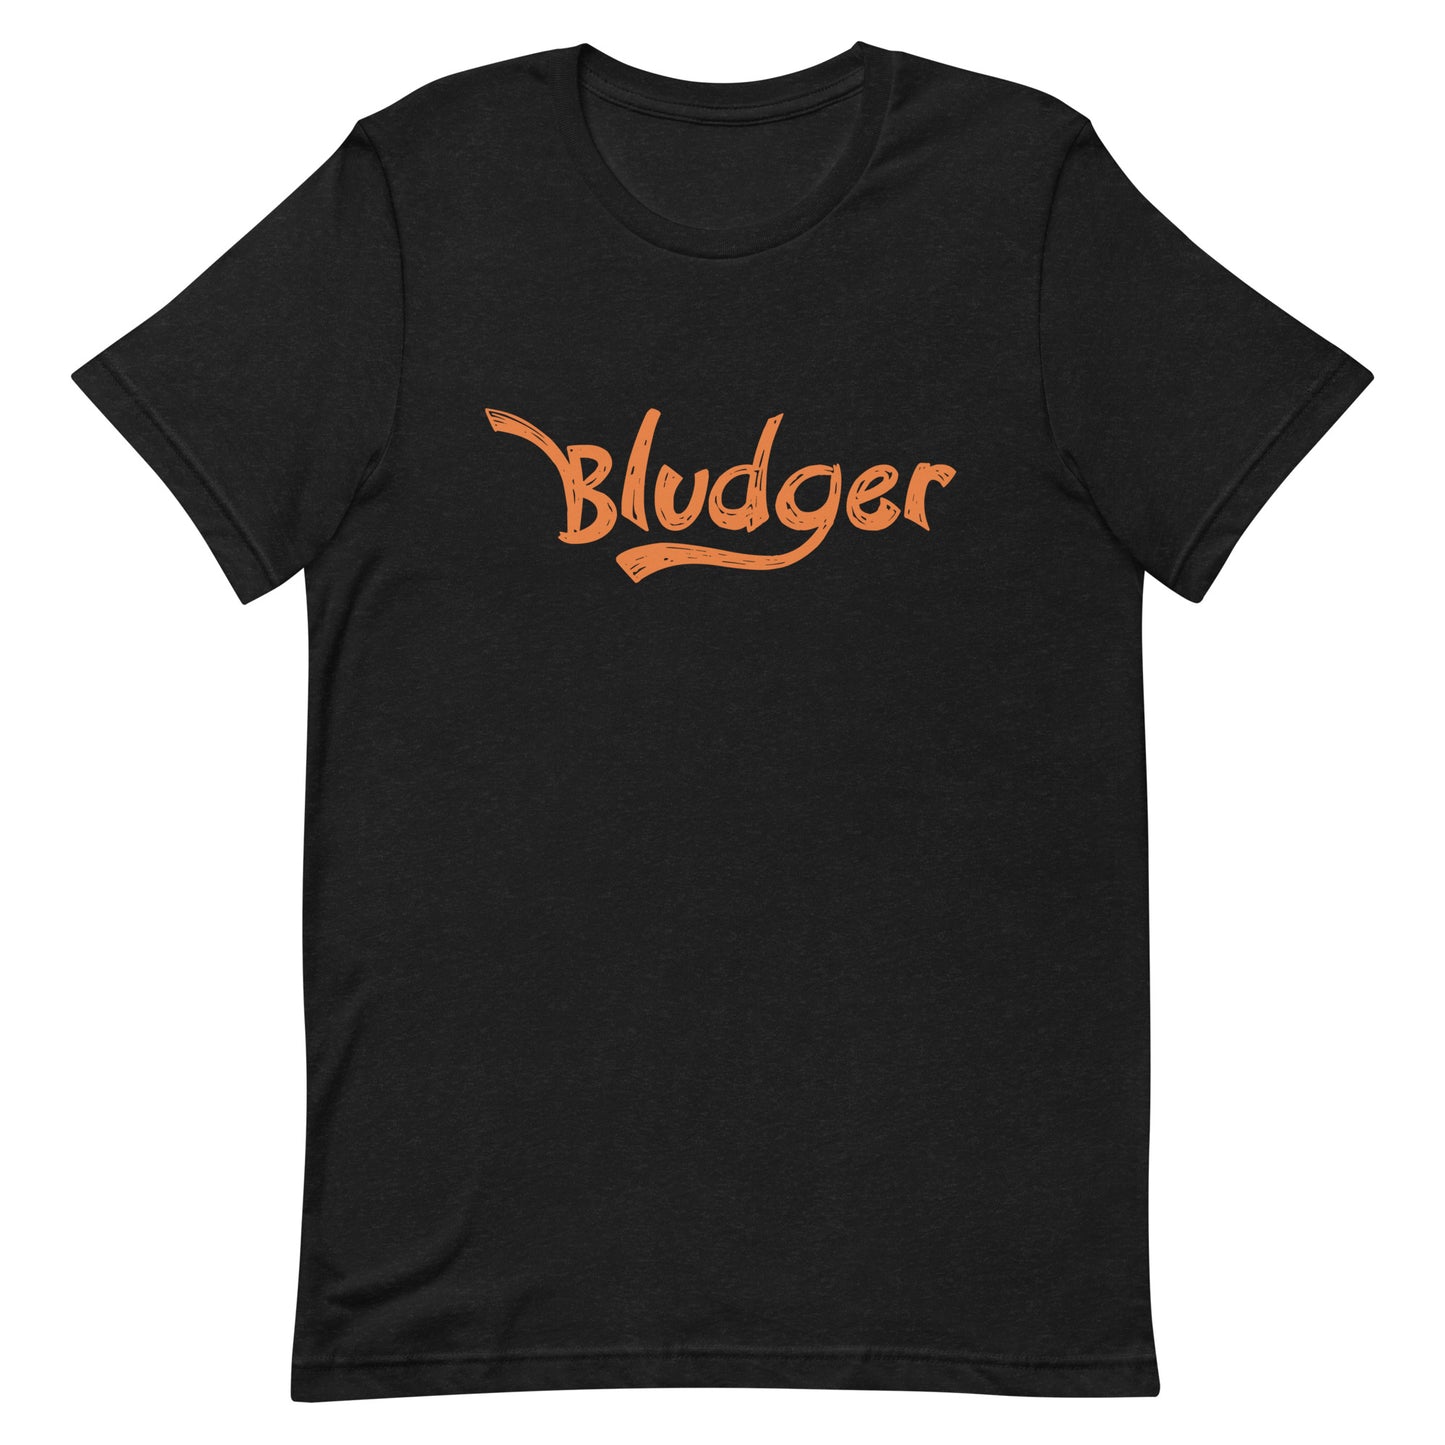 Bludger - Sustainably Made Men's Short Sleeve Tee